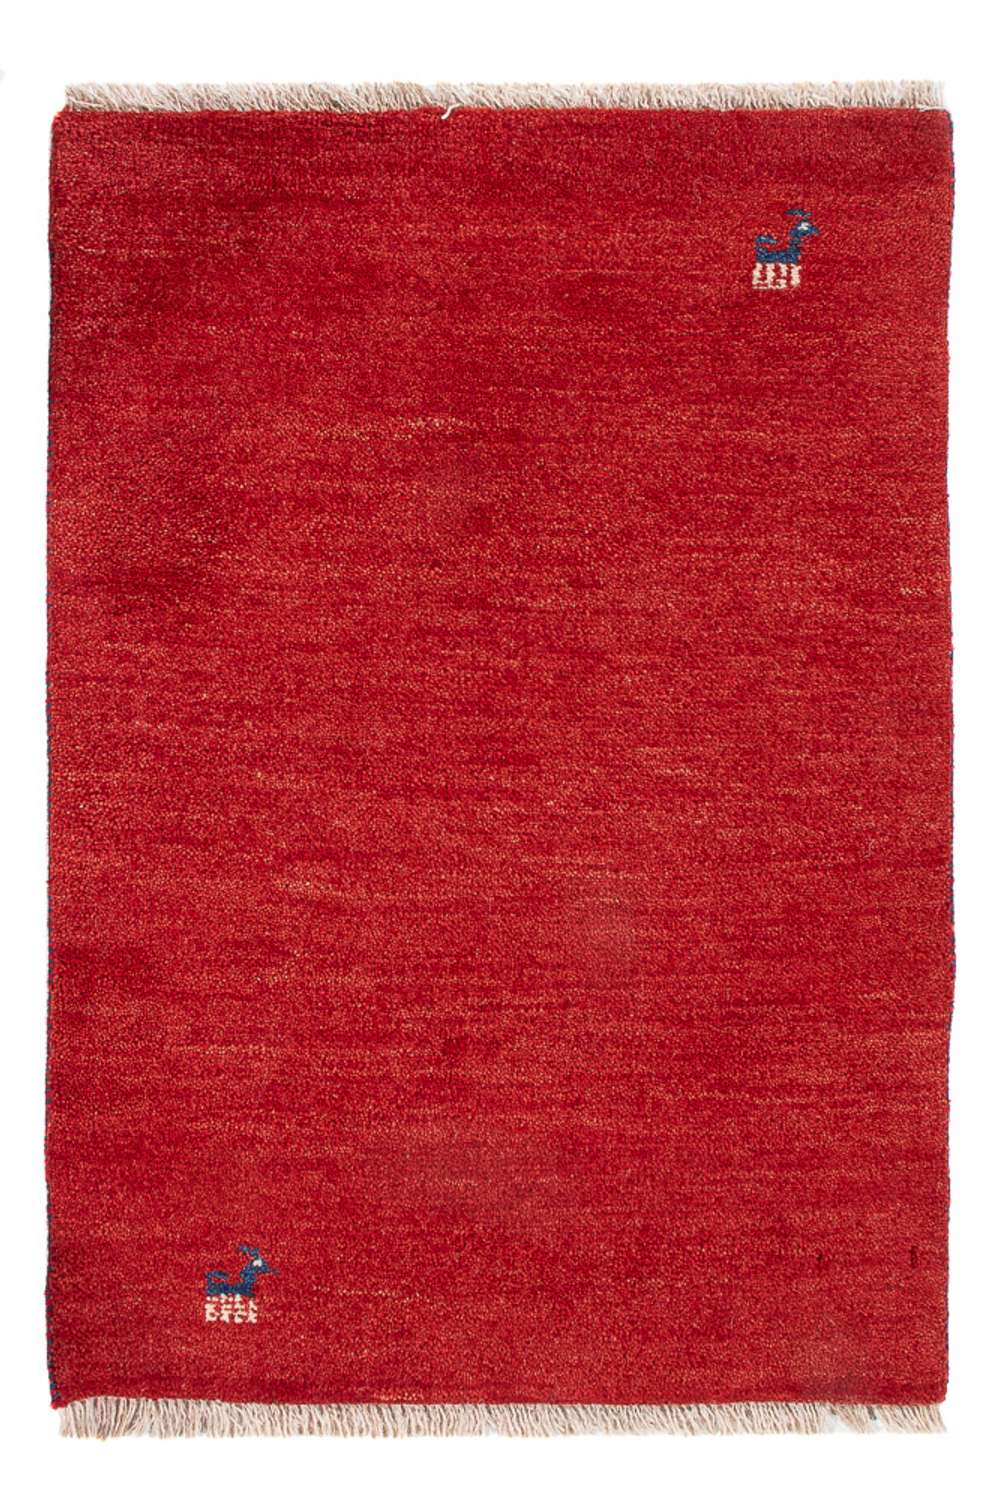 Gabbeh-teppe - persisk - 87 x 60 cm - rød